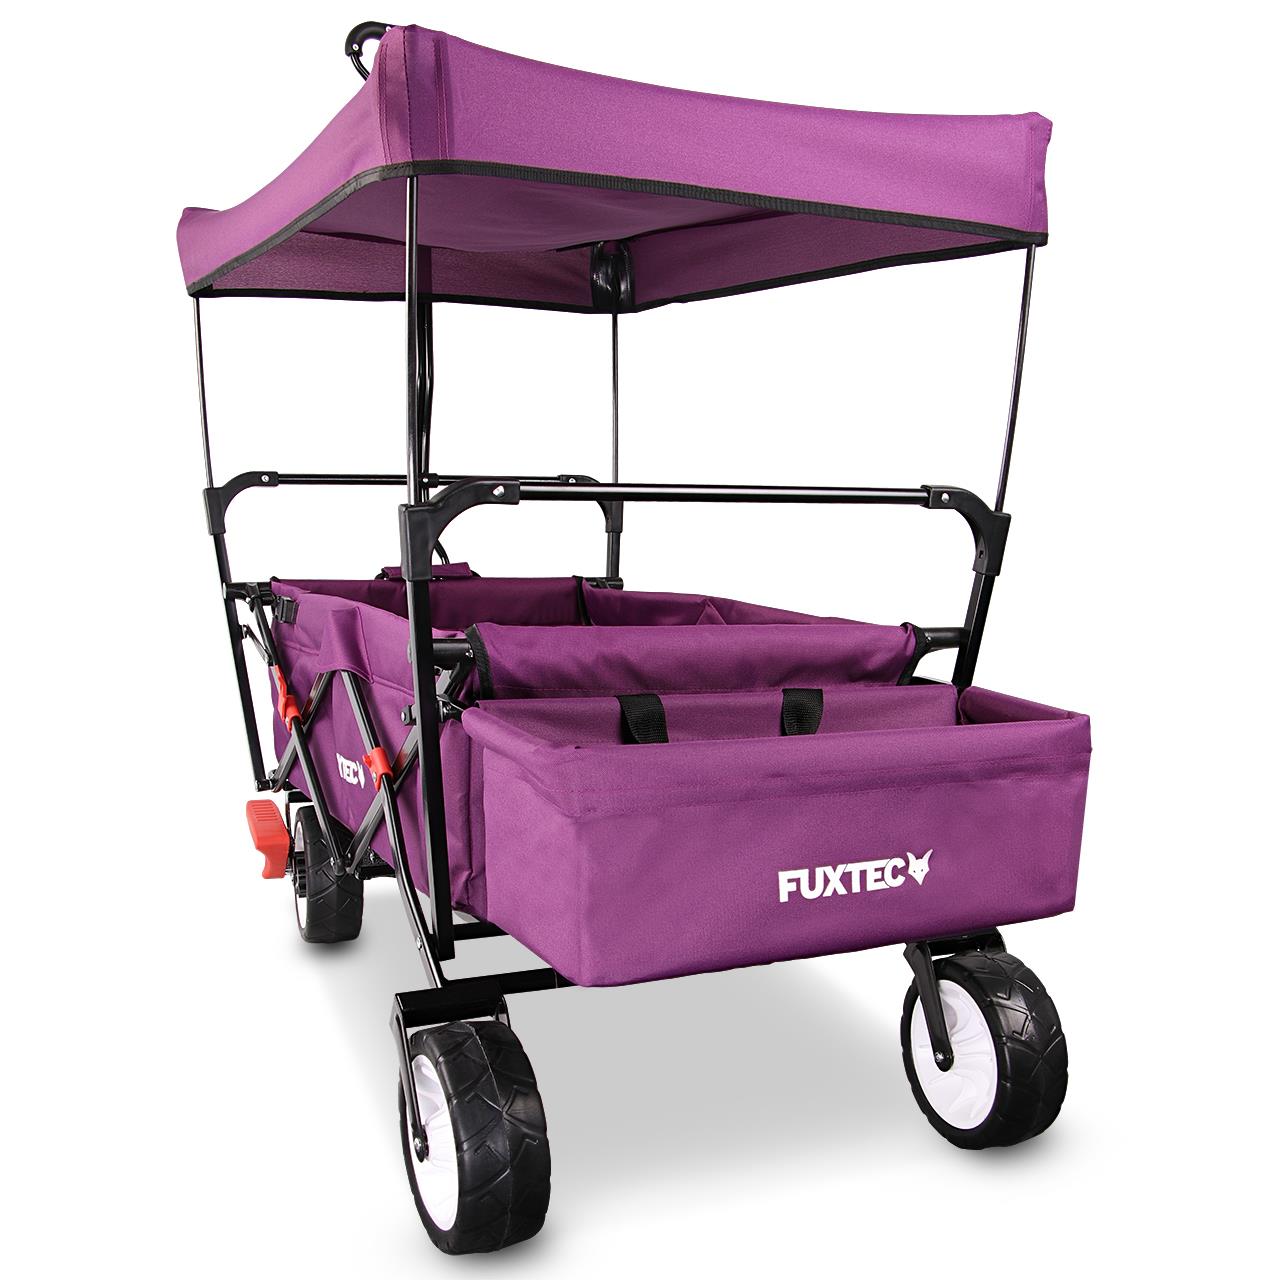 FUXTEC folding/foldable wagon CT350